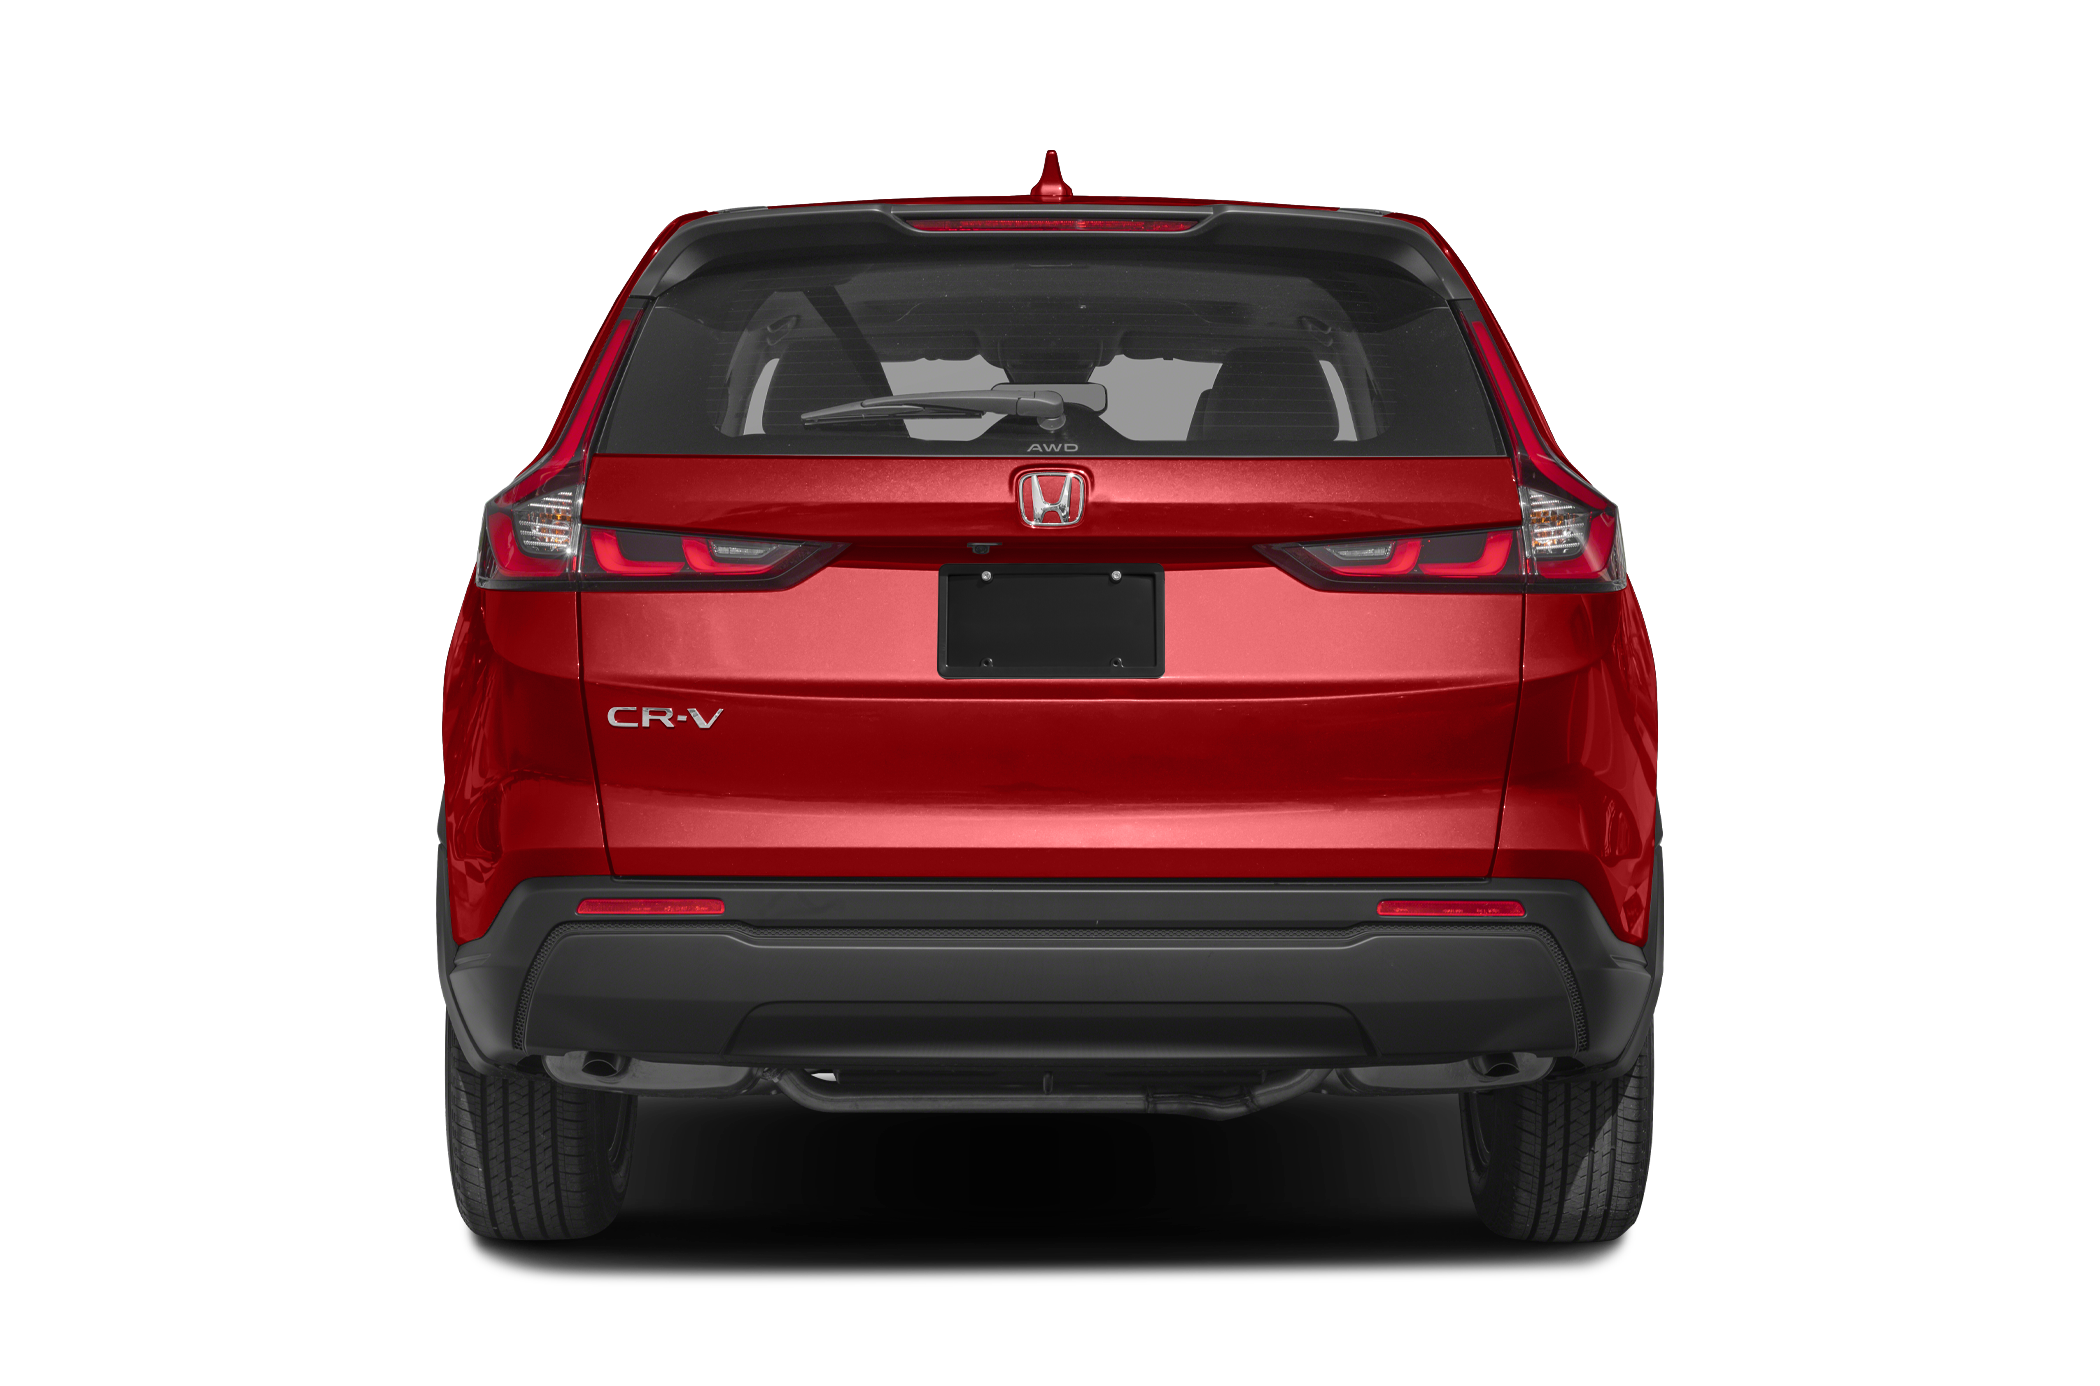 Honda CR-V (fifth generation) - Wikipedia